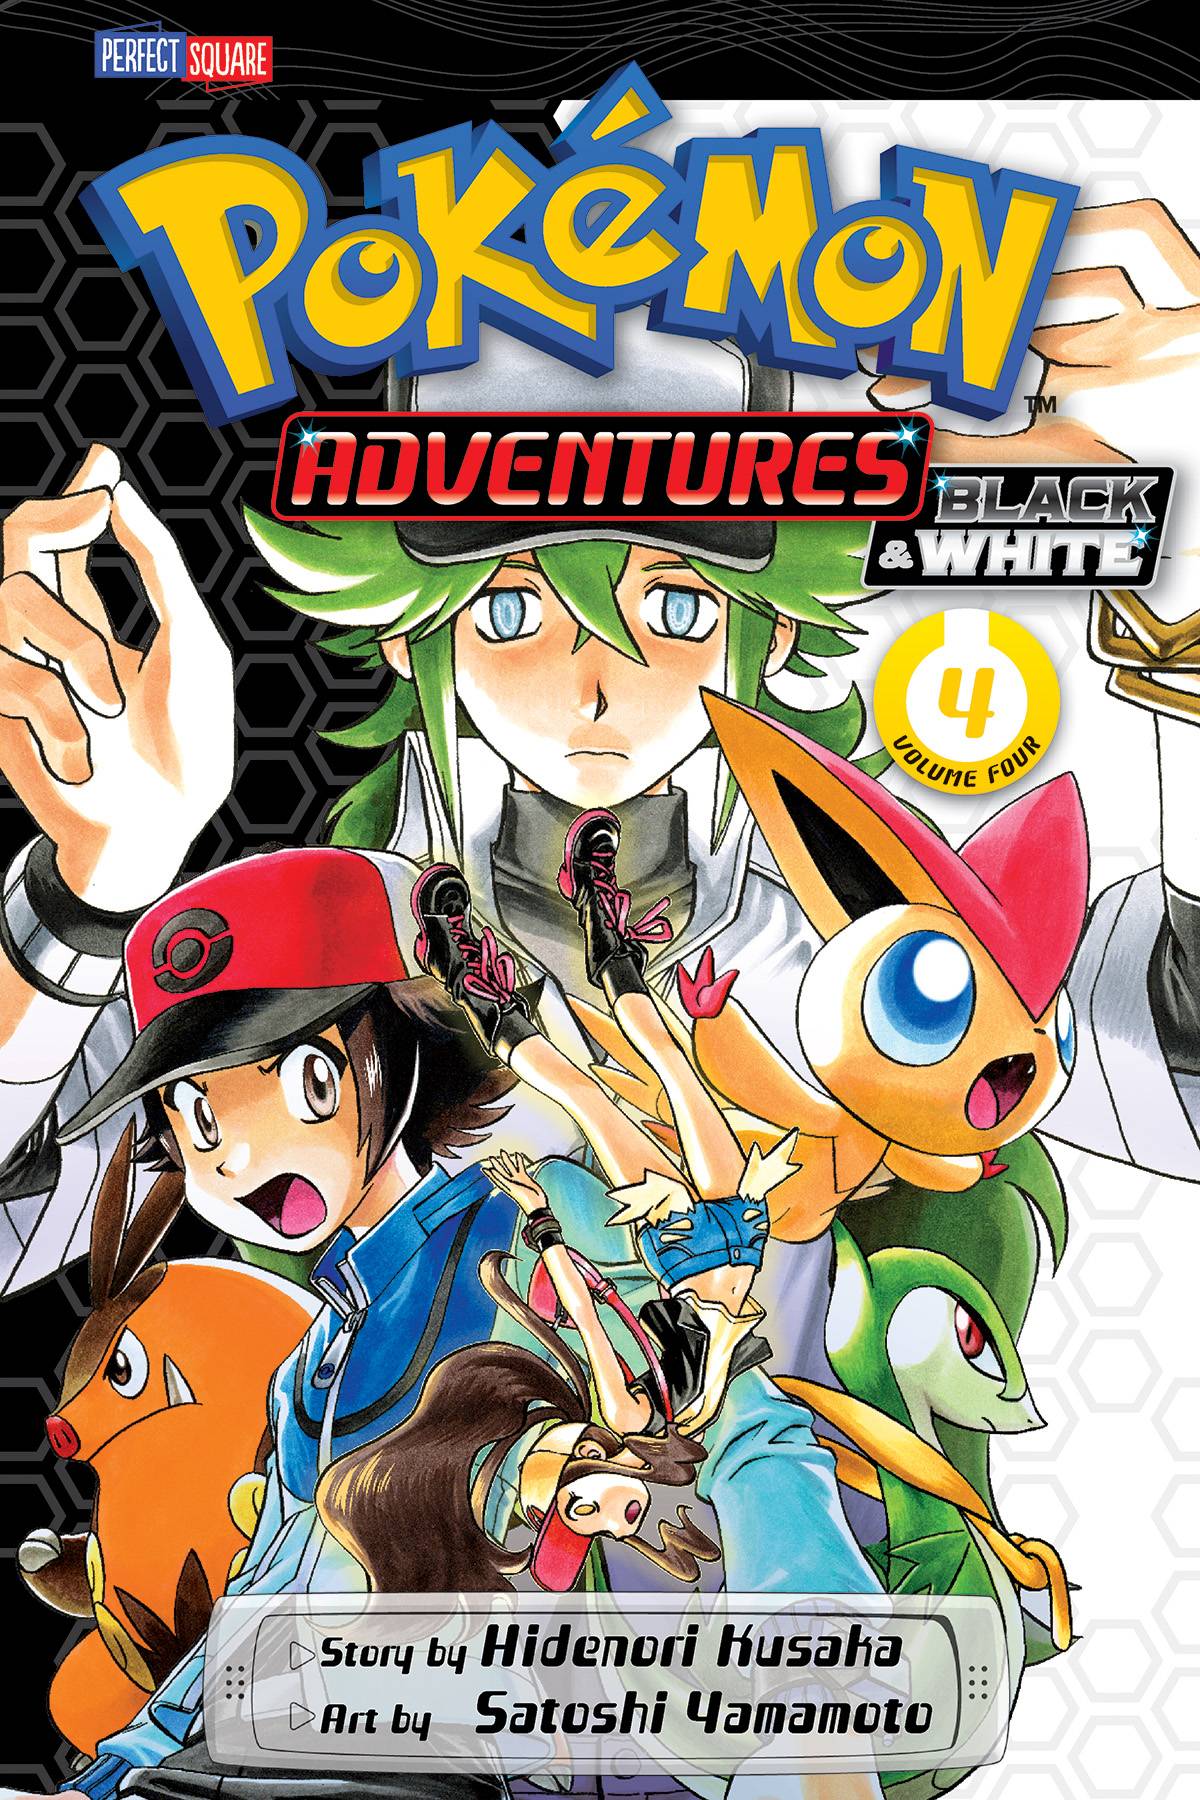 Pokémon Adventure Black & White Manga Volume 4